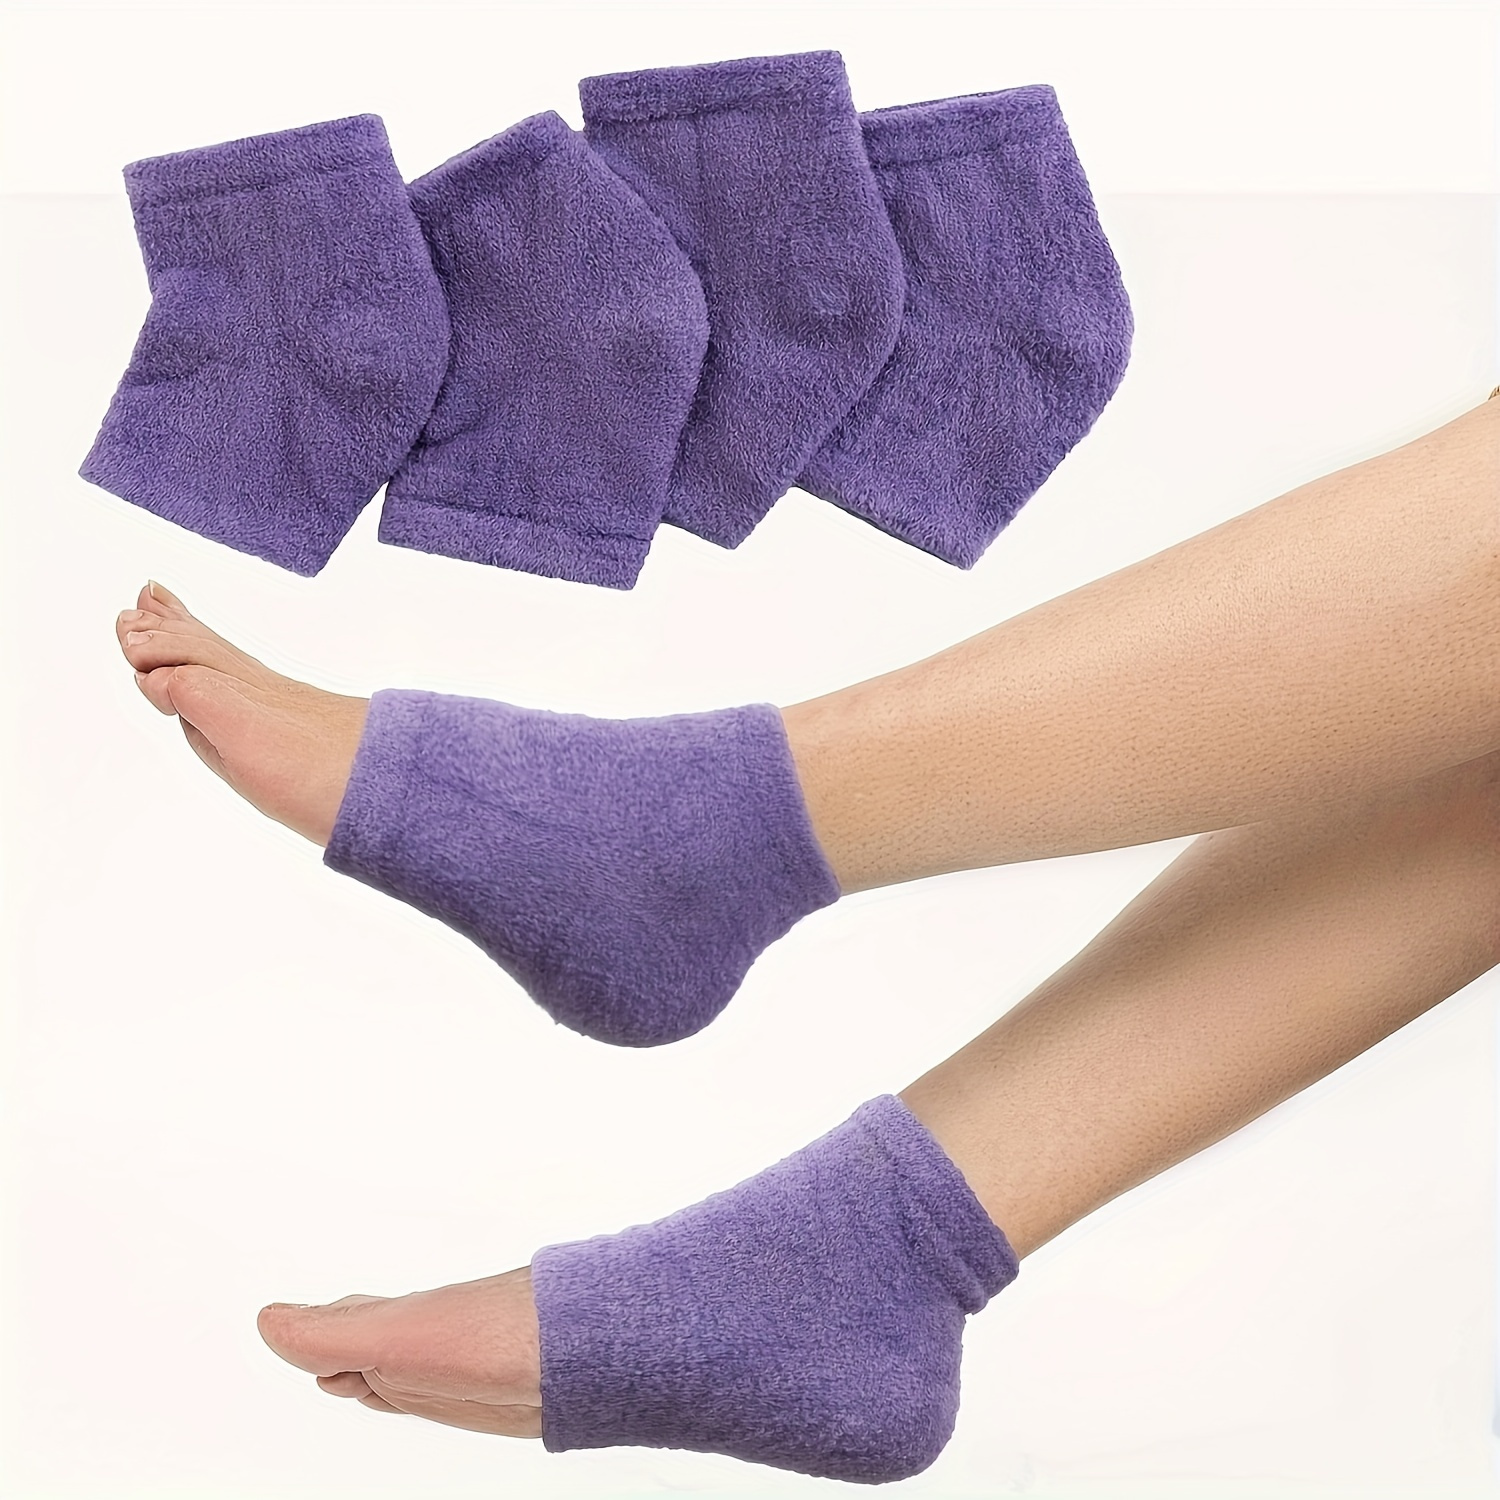 

Moisturizing Gel Lined Heel Socks - Unscented Toeless Fuzzy Spa Socks For Dry Cracked Feet - 1/3/5 Pair Pack For Overnight Healing